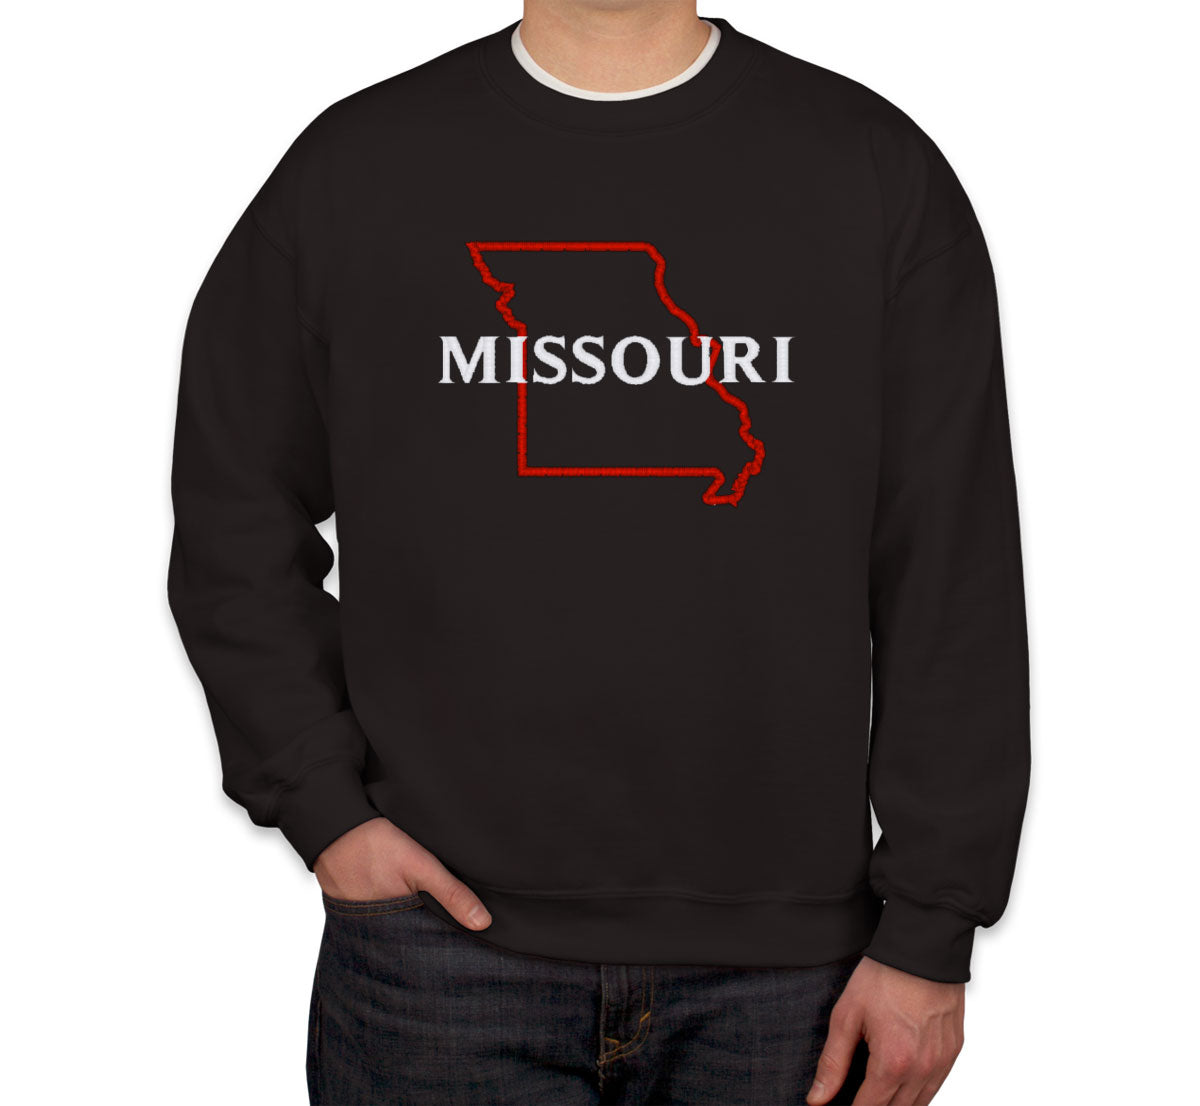 Missouri Embroidered Unisex Sweatshirt